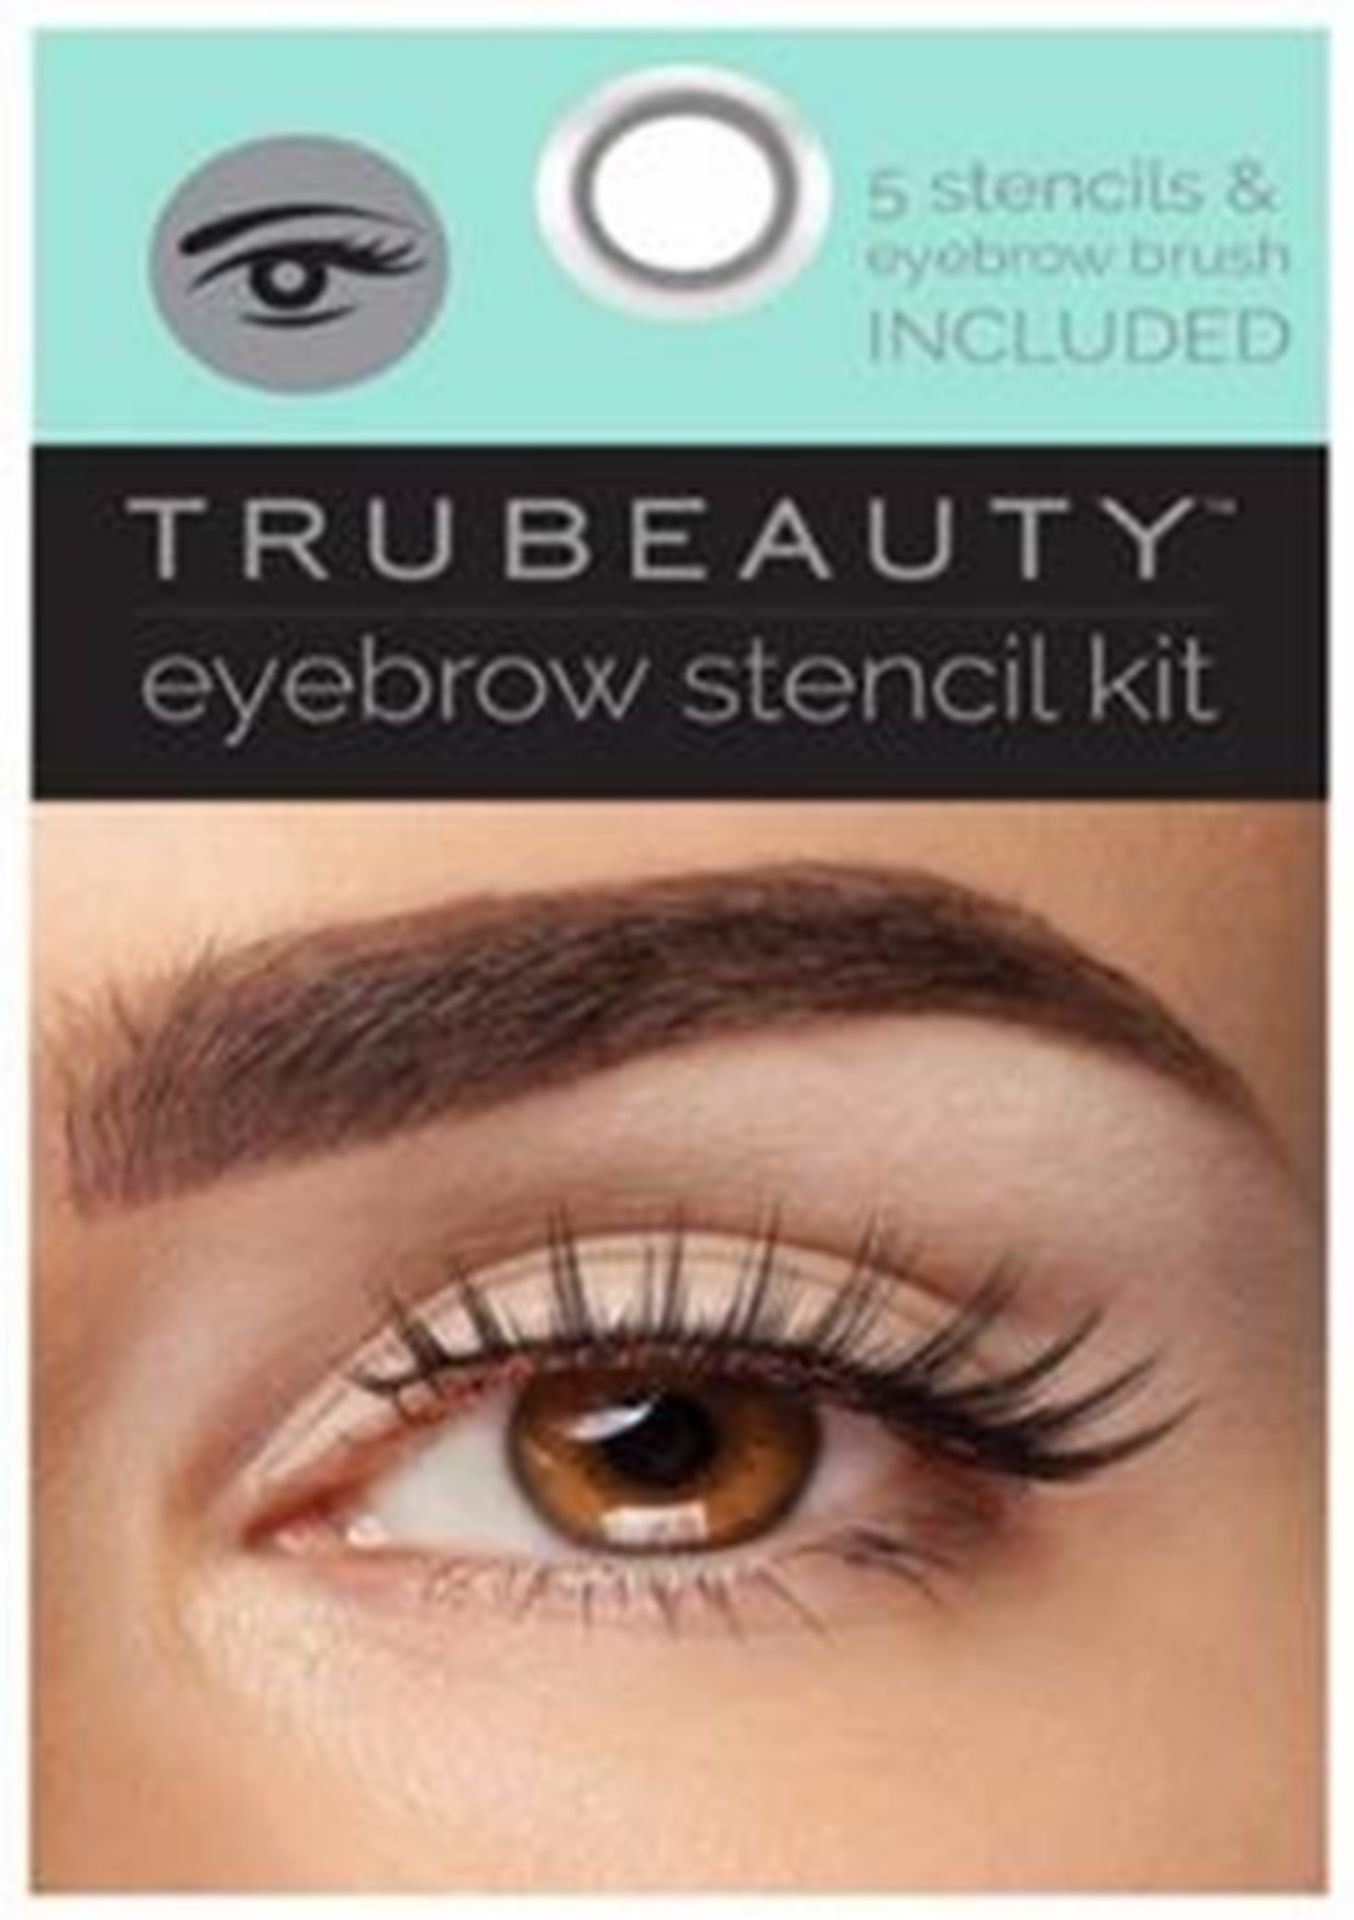 100 x Brand New Trubeauty Eyebrow Stencil Kit | Total RRP £299